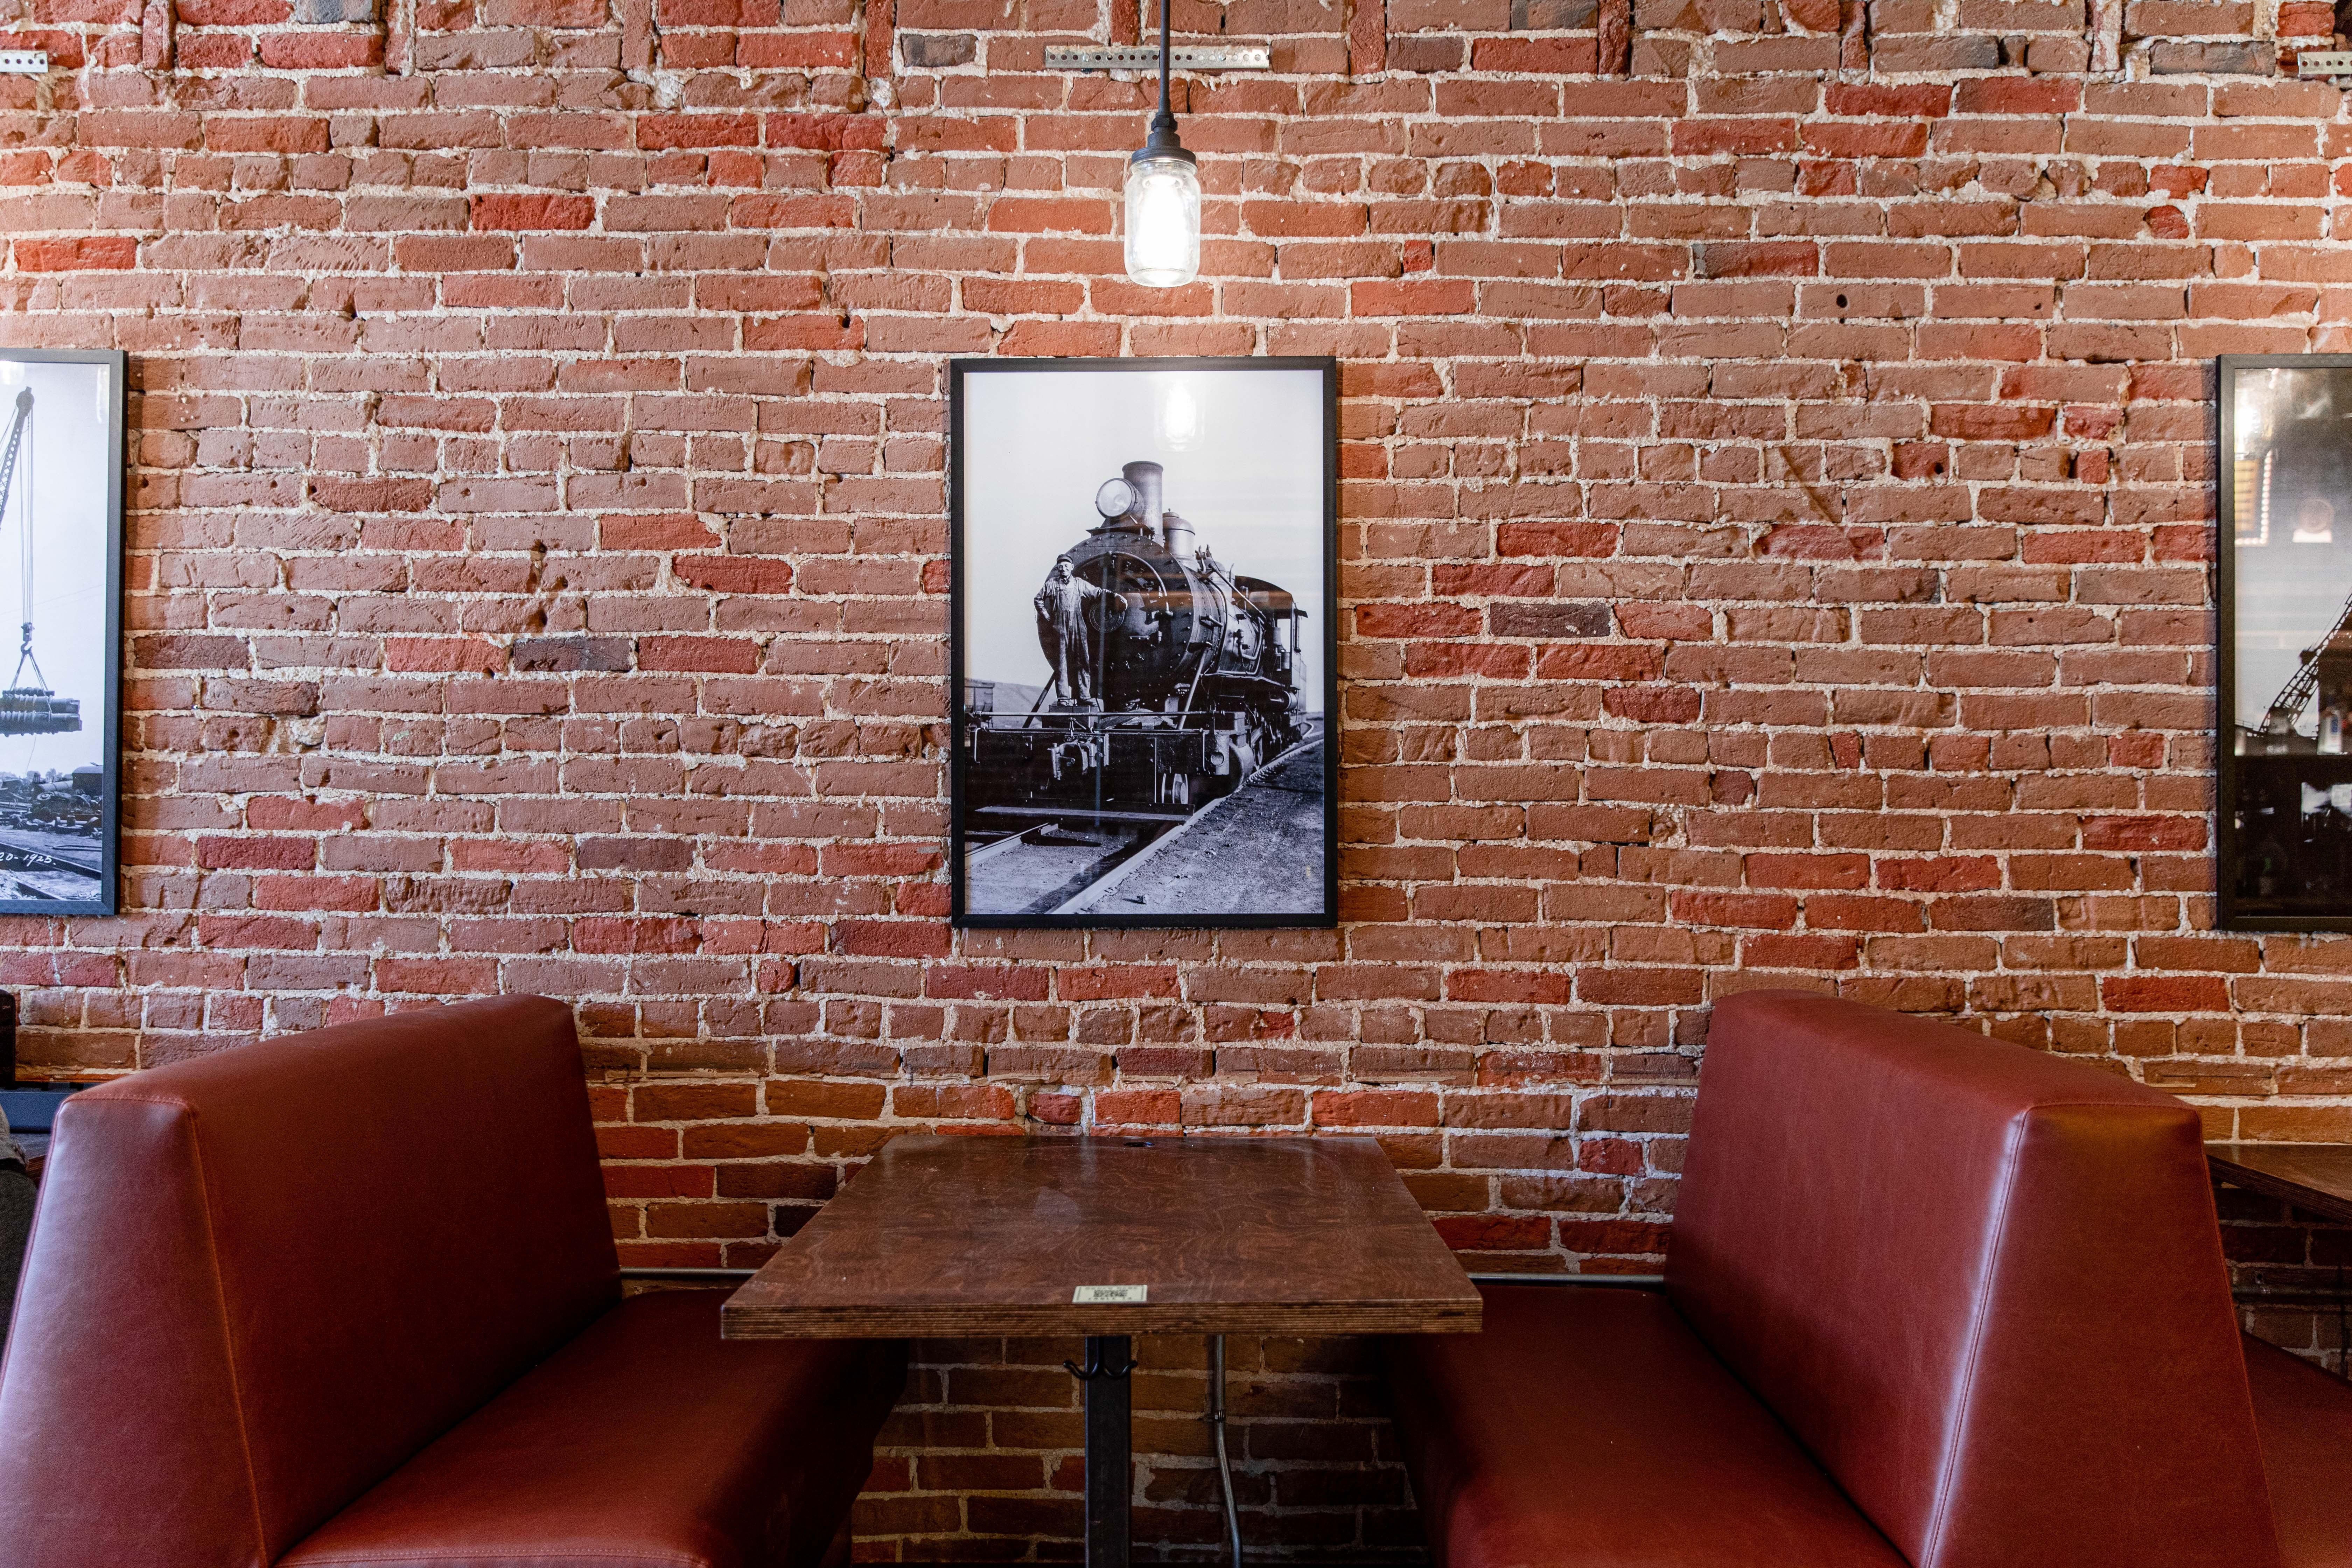 Wonder Walls: How Restaurants Are Getting Into Custom Décor